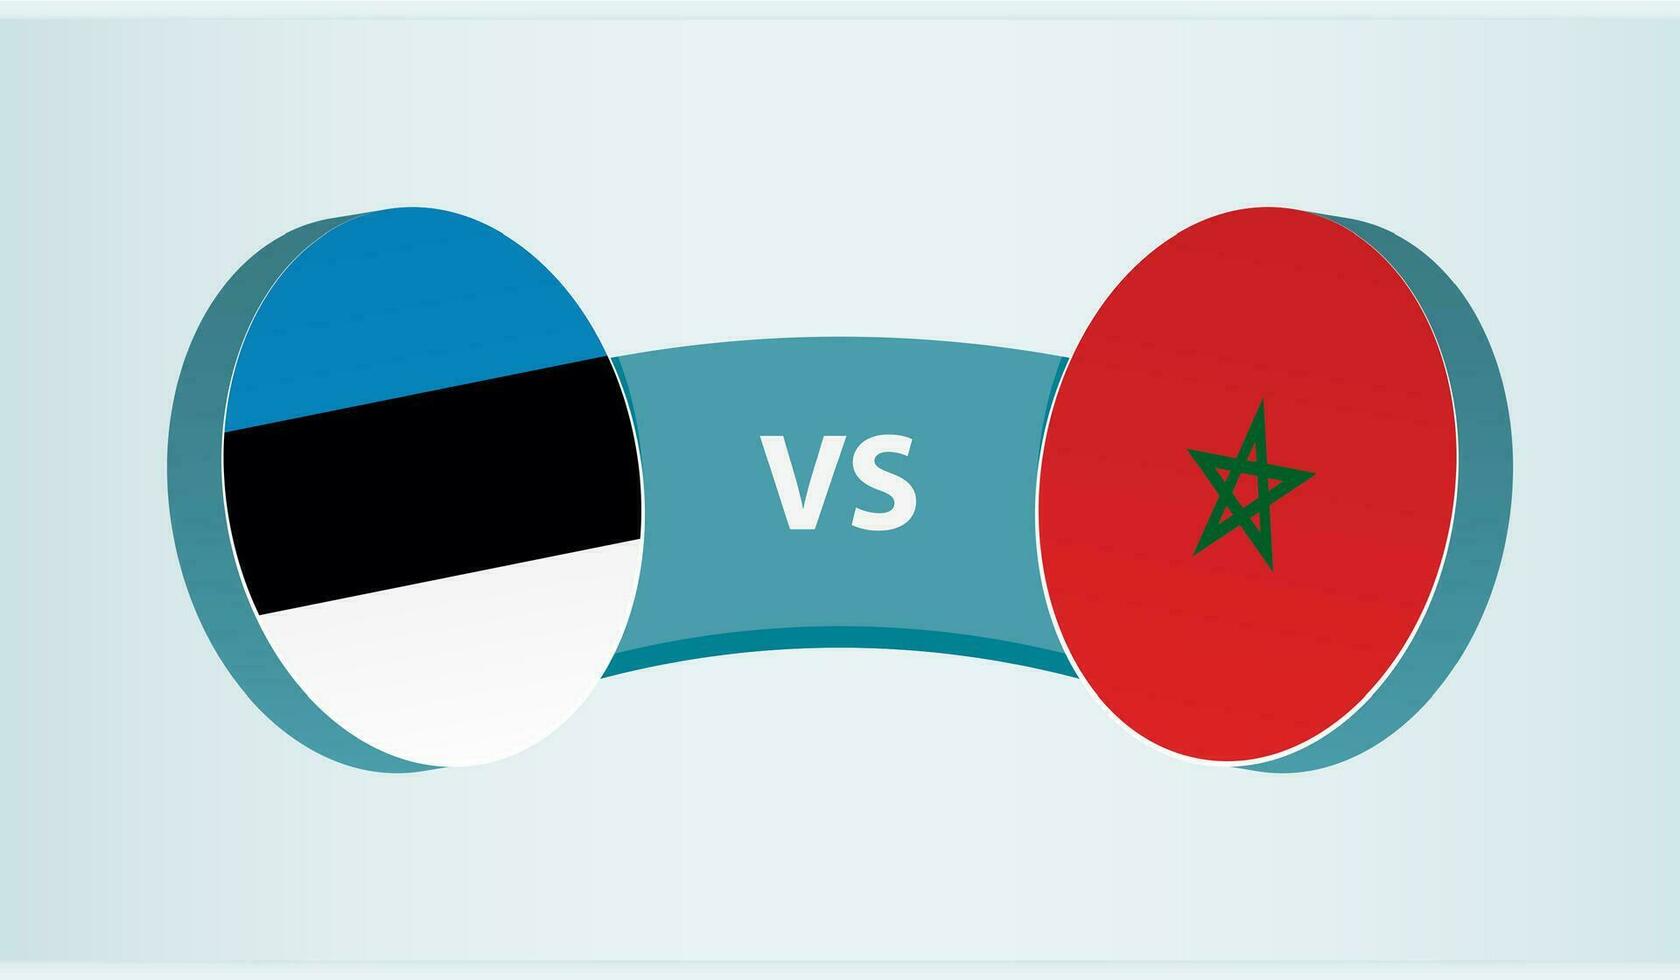 Estonia versus Morocco, team sports competition concept. vector